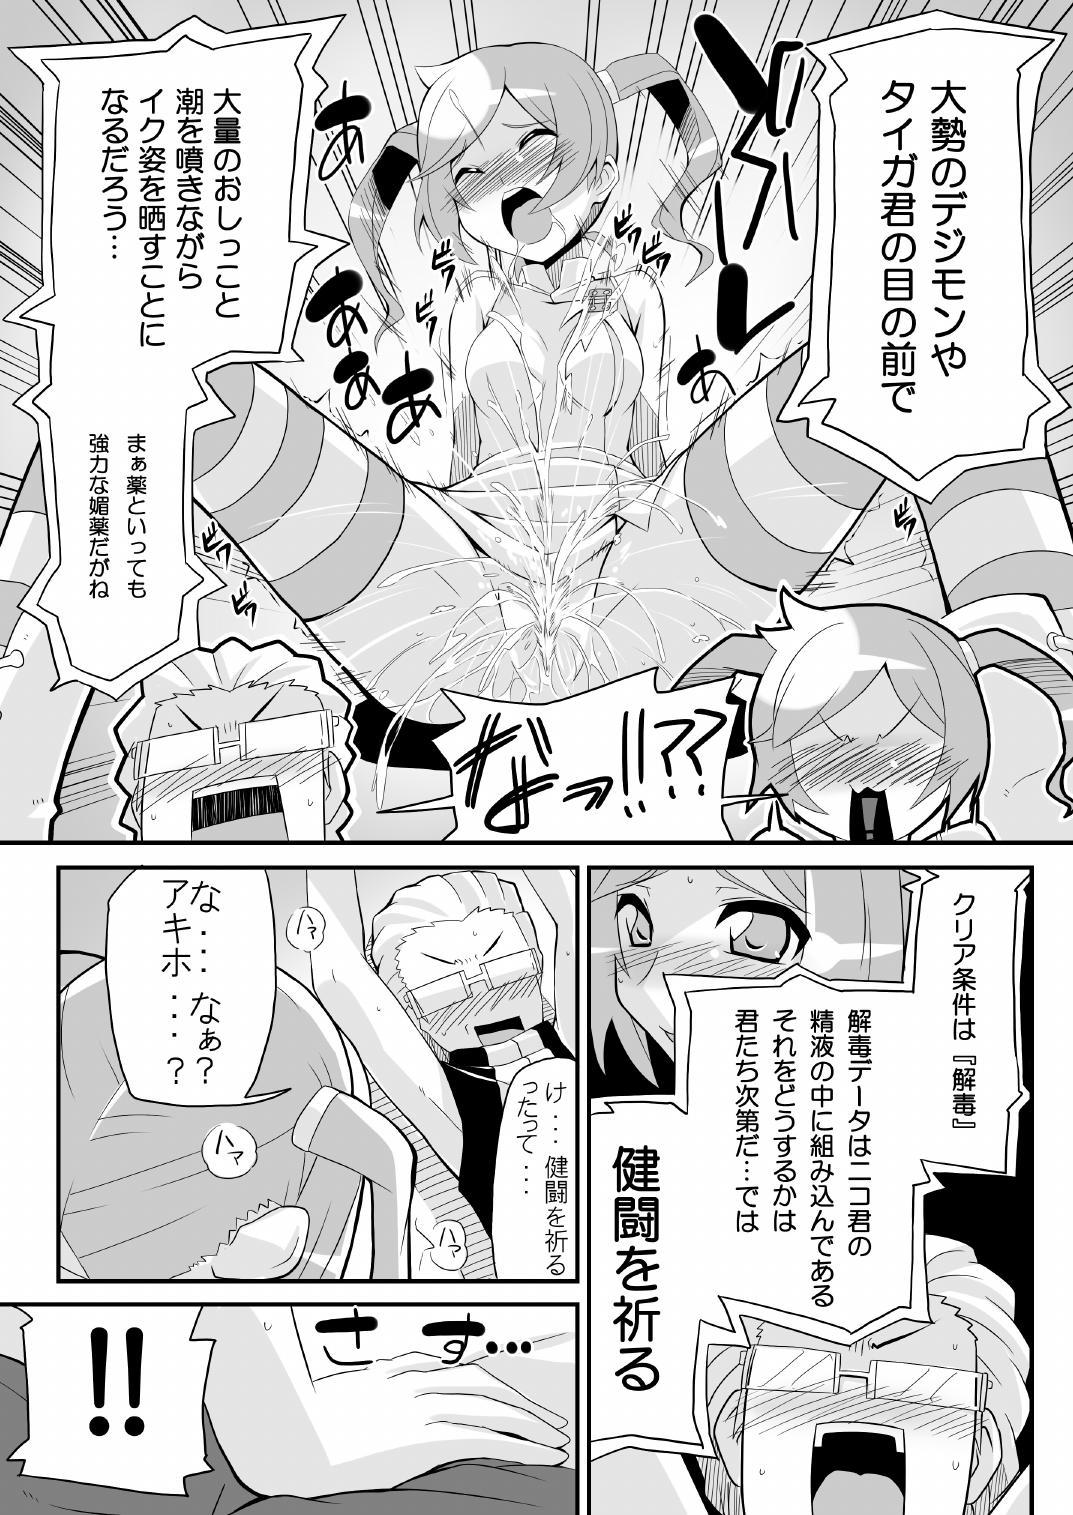 Amador Re:Akiho/Rinatize Ero - Digimon Freak - Page 5